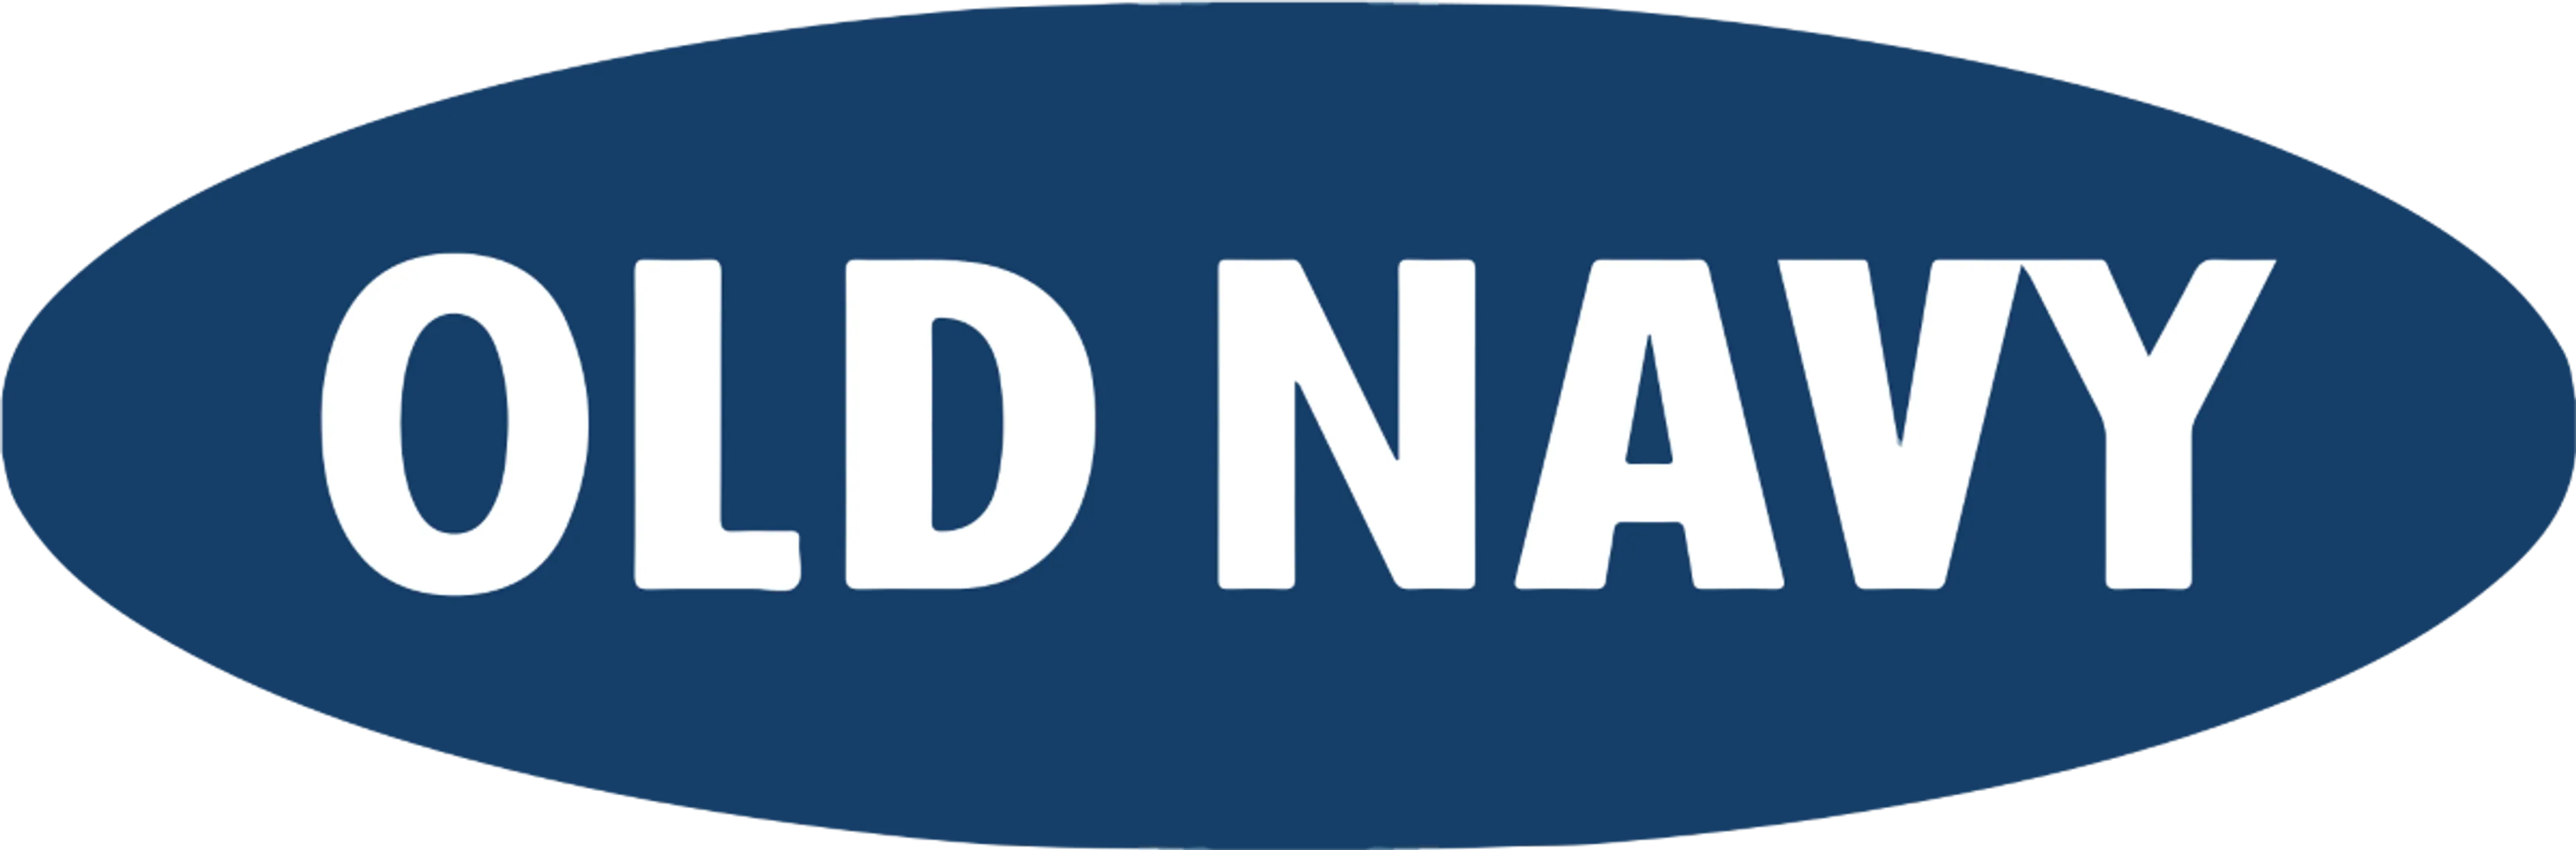 OLD NAVY logo